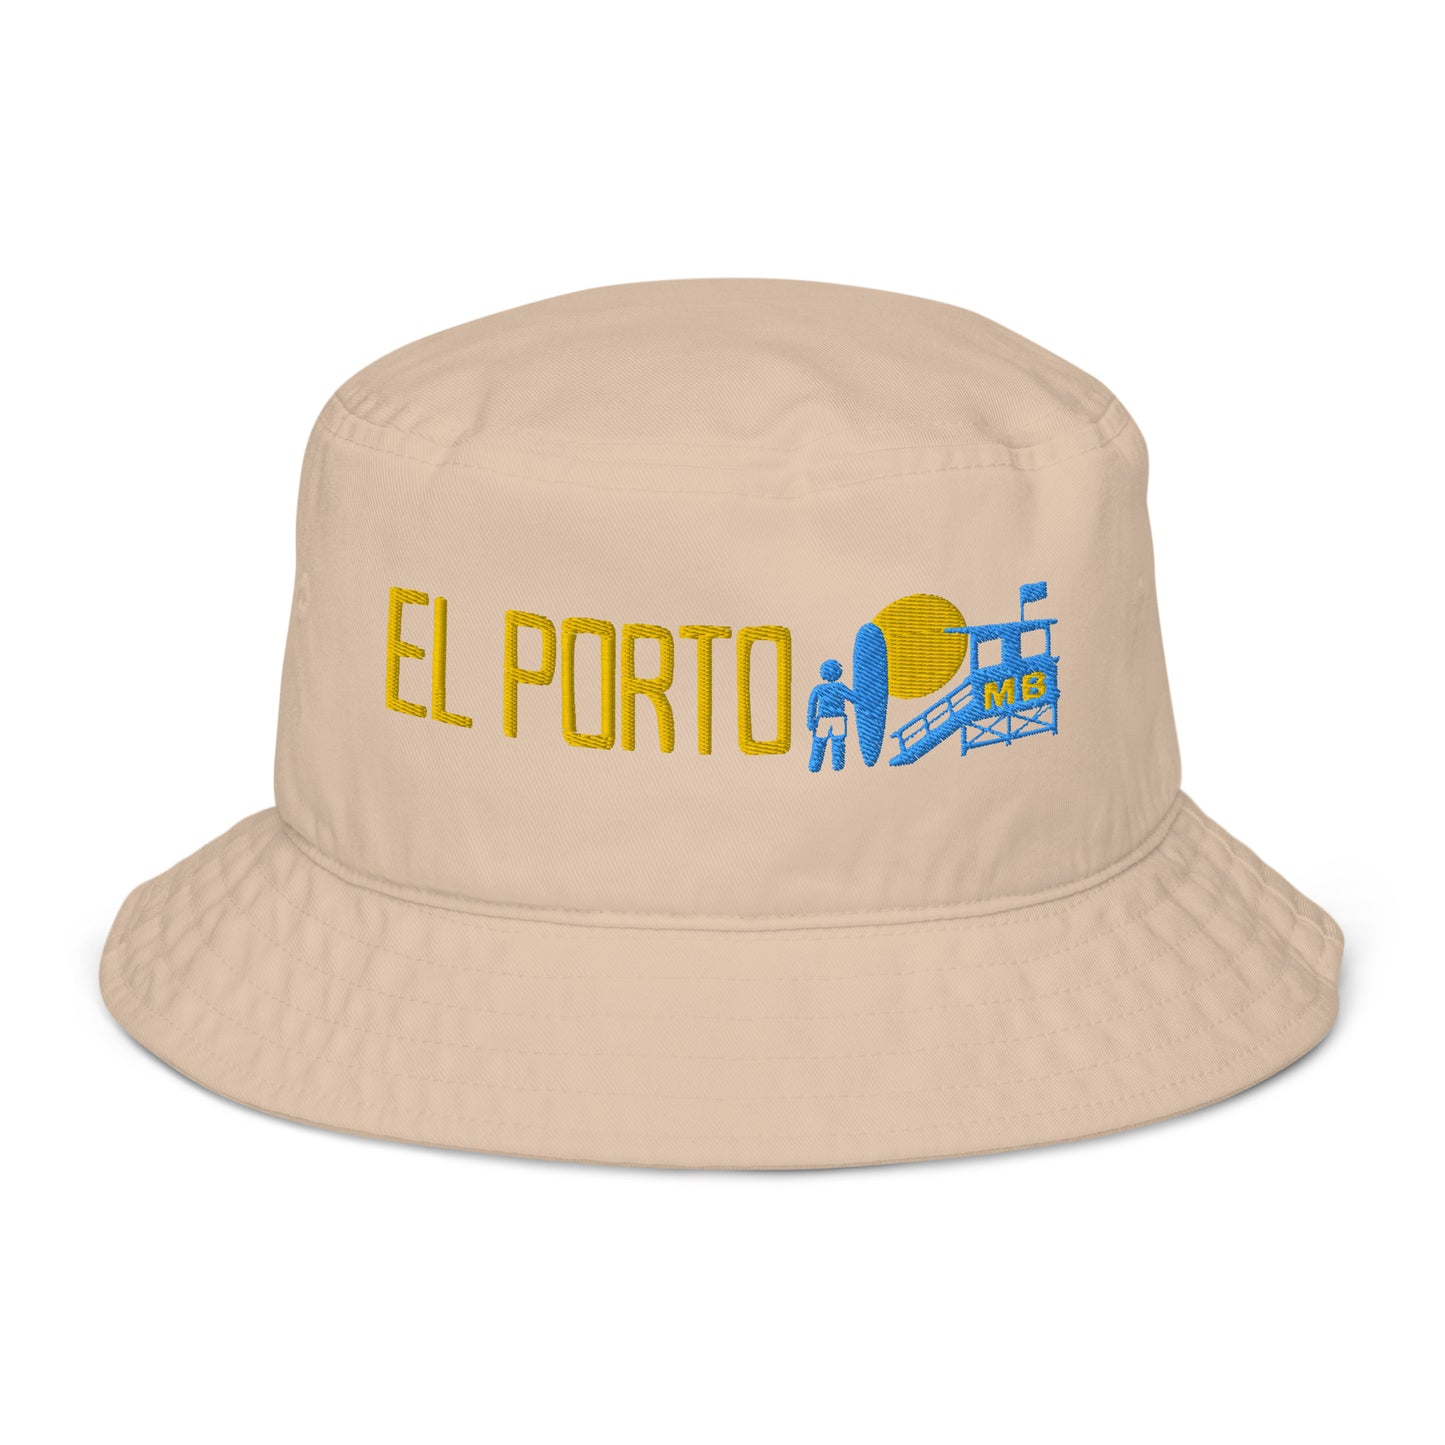 EL PORTO MB SURFER Organic bucket hat